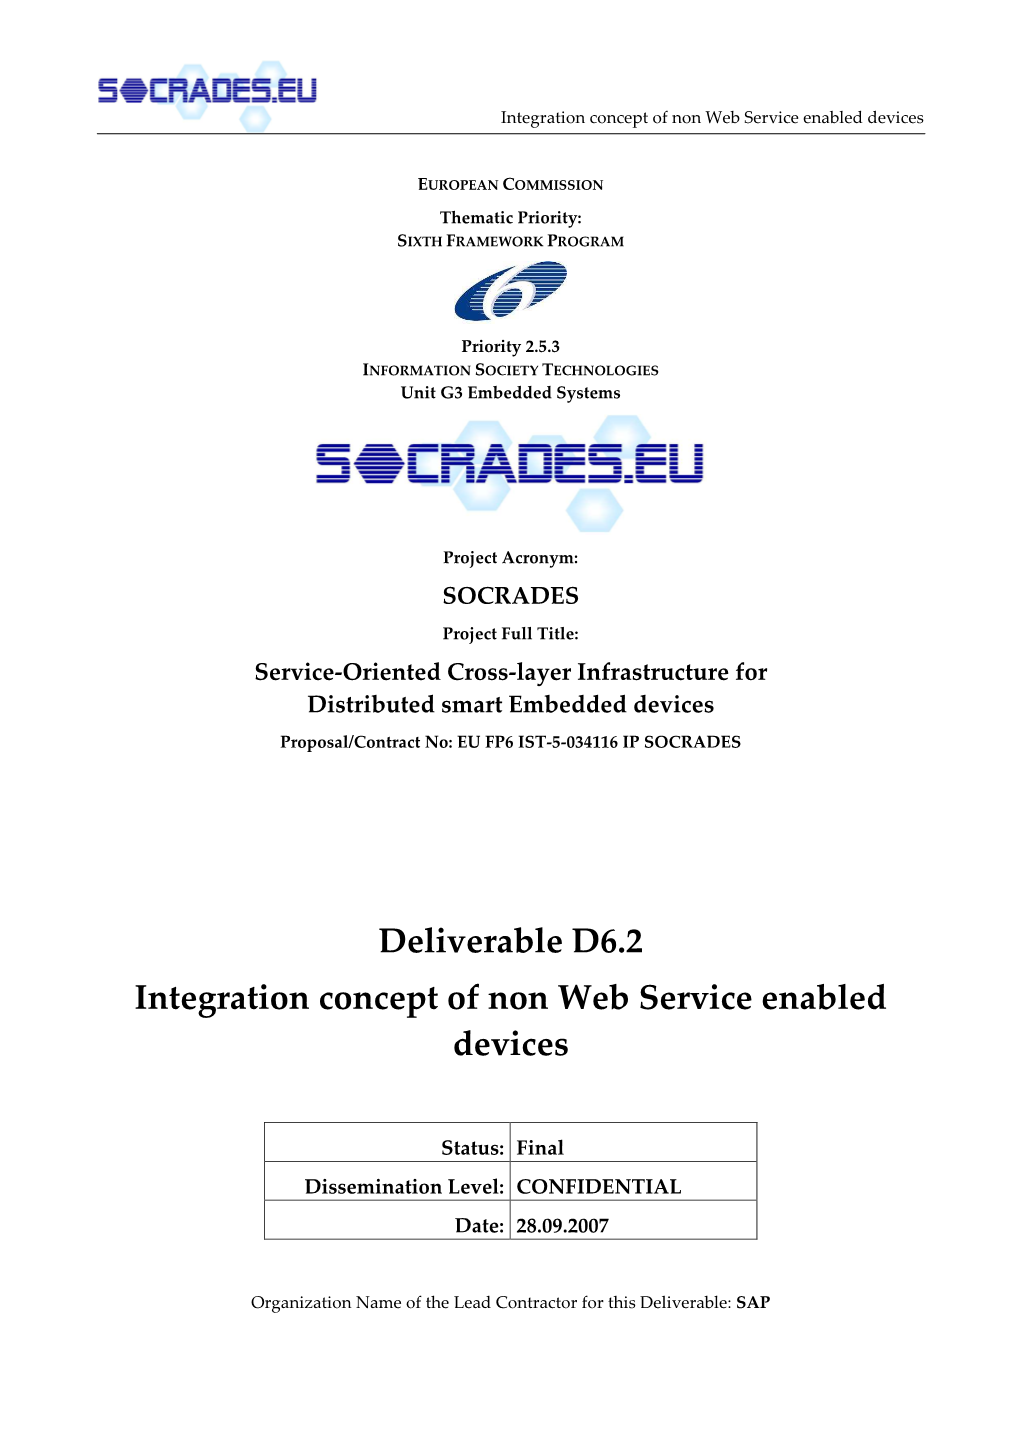 Deliverable D6.2 Integration Concept of Non Web Service Enabled Devices